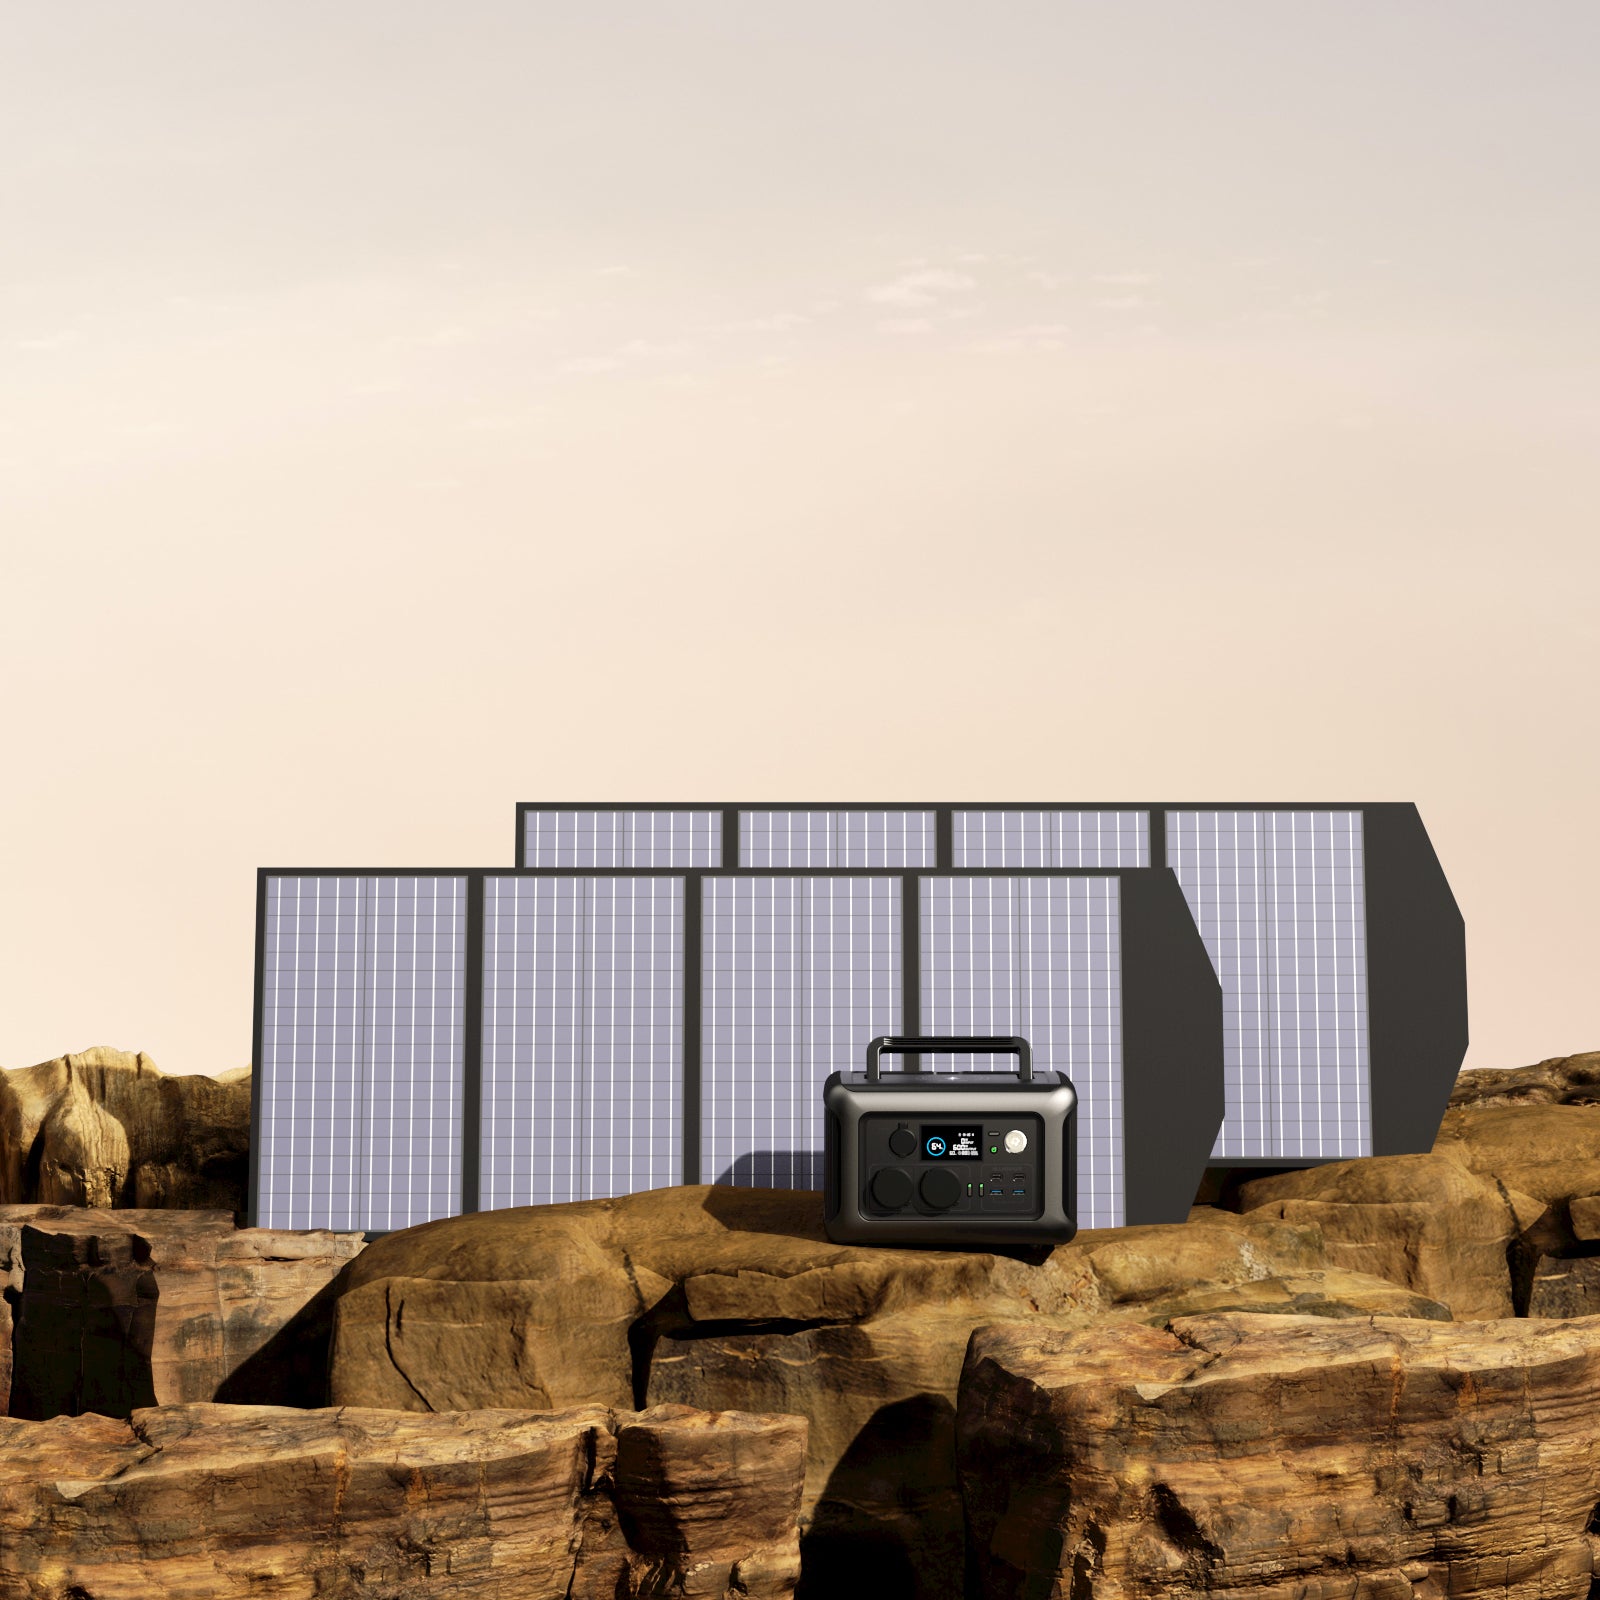 r600-black-solar-generator-kit-sp033-200w-panel-2-eu.jpg